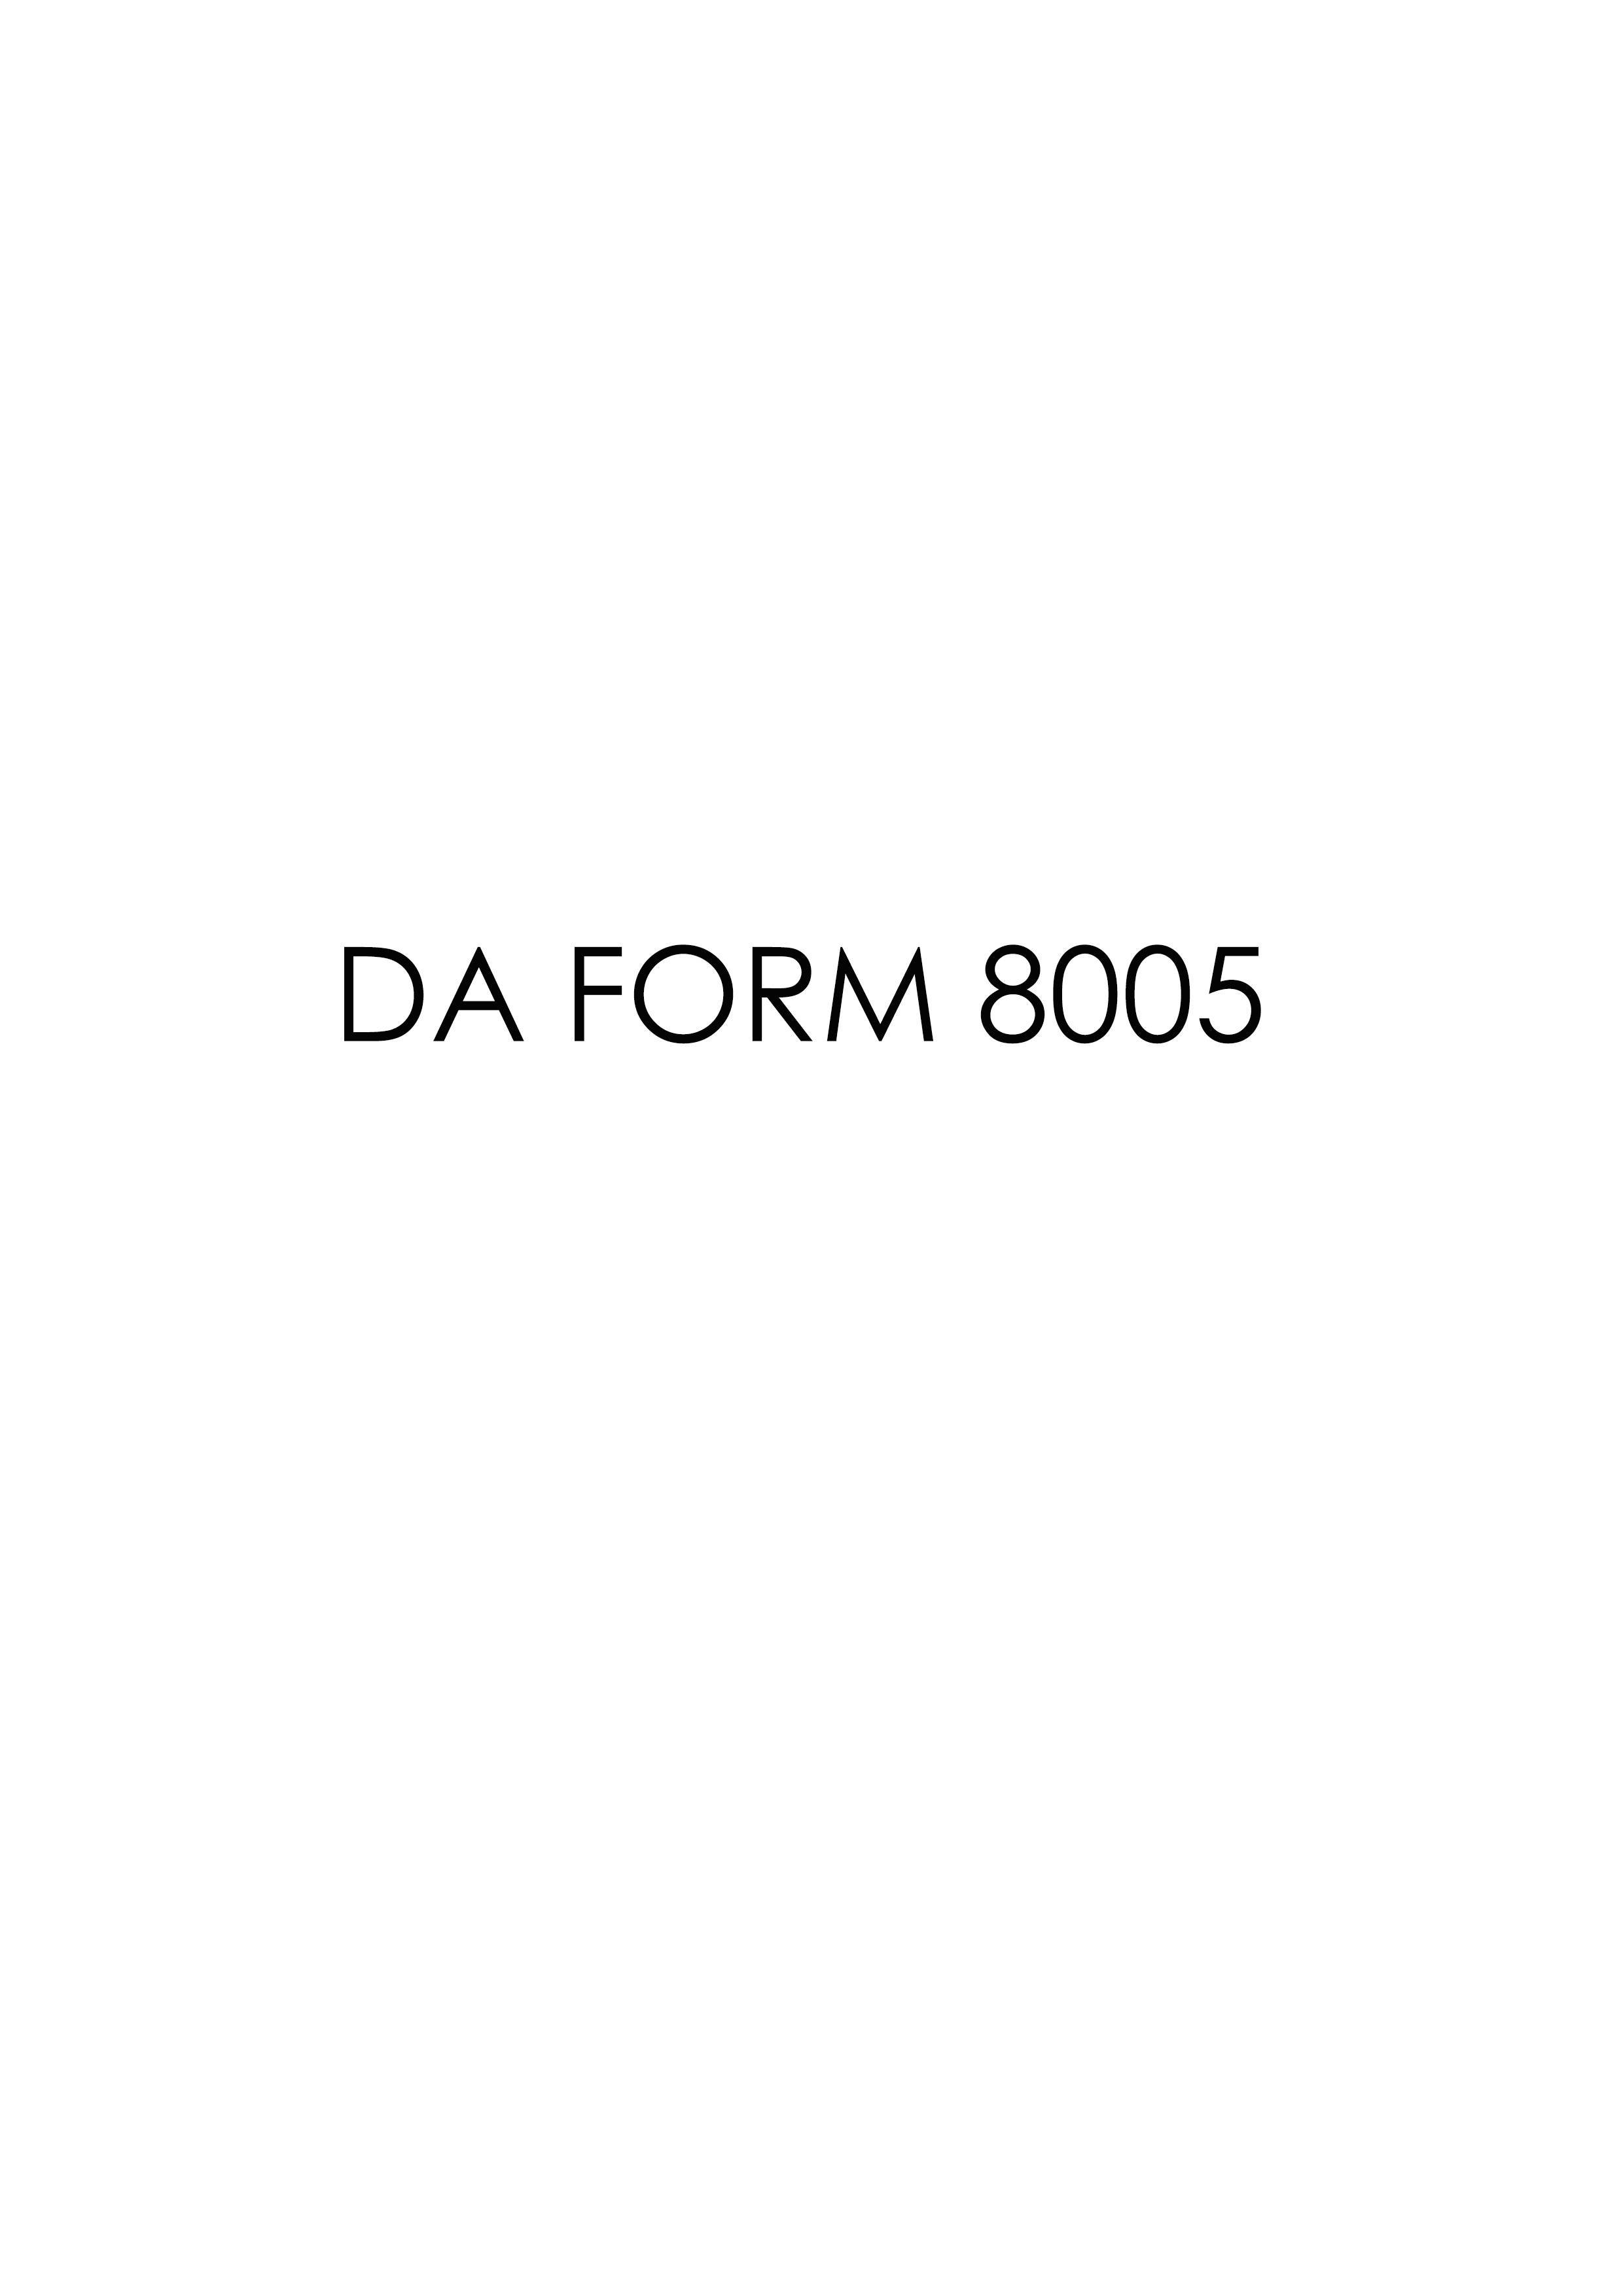 Download da 8005 Form